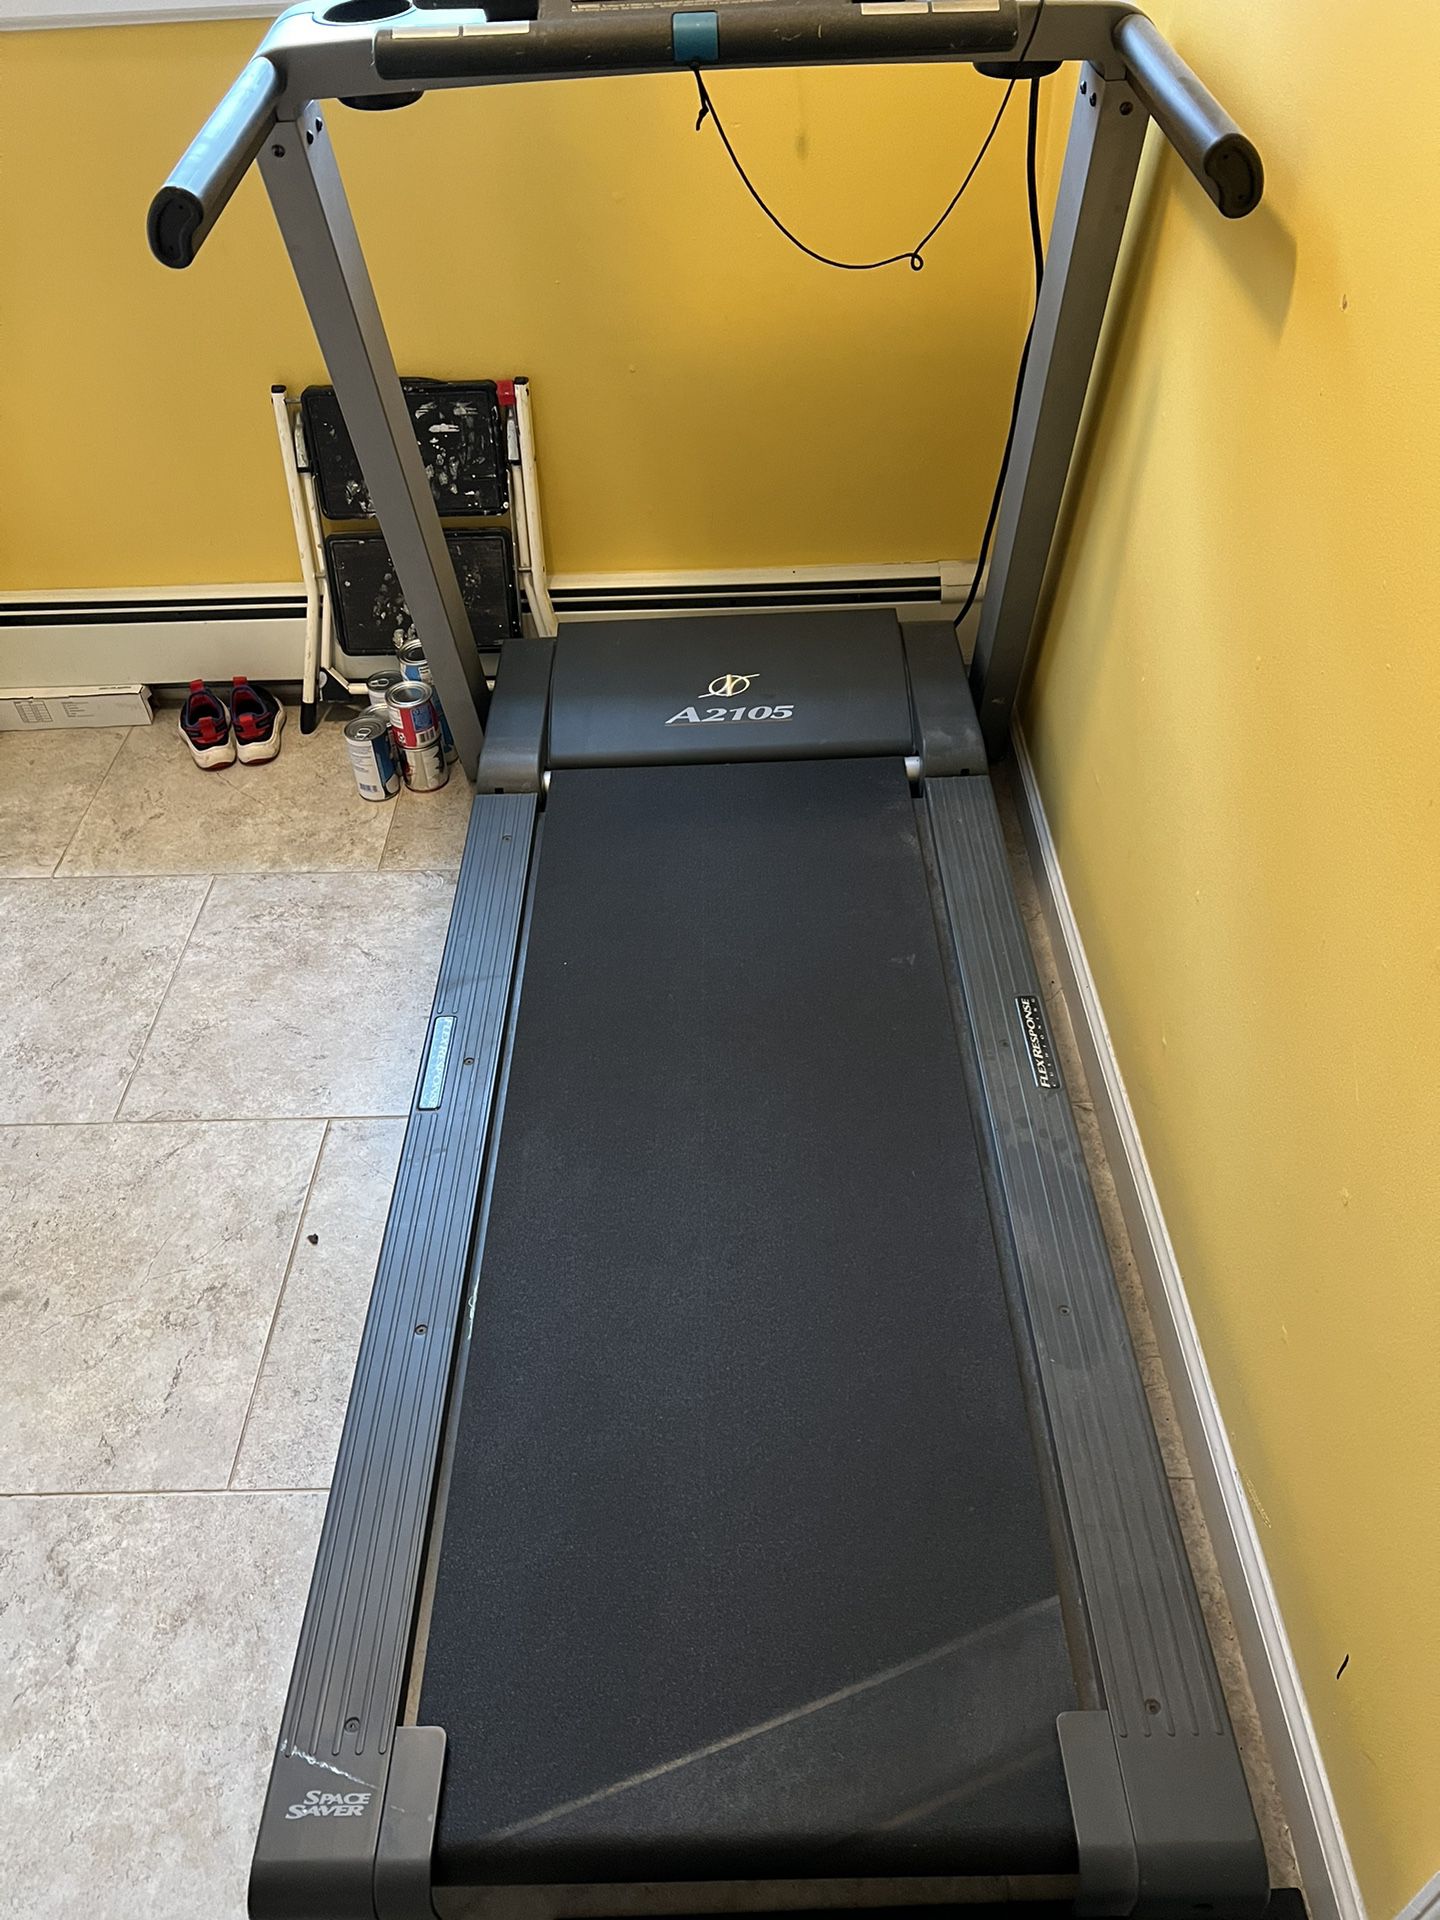 Absurd Handelsmerk Oven Nordic Track Treadmill For Sale for Sale in West Babylon, NY - OfferUp